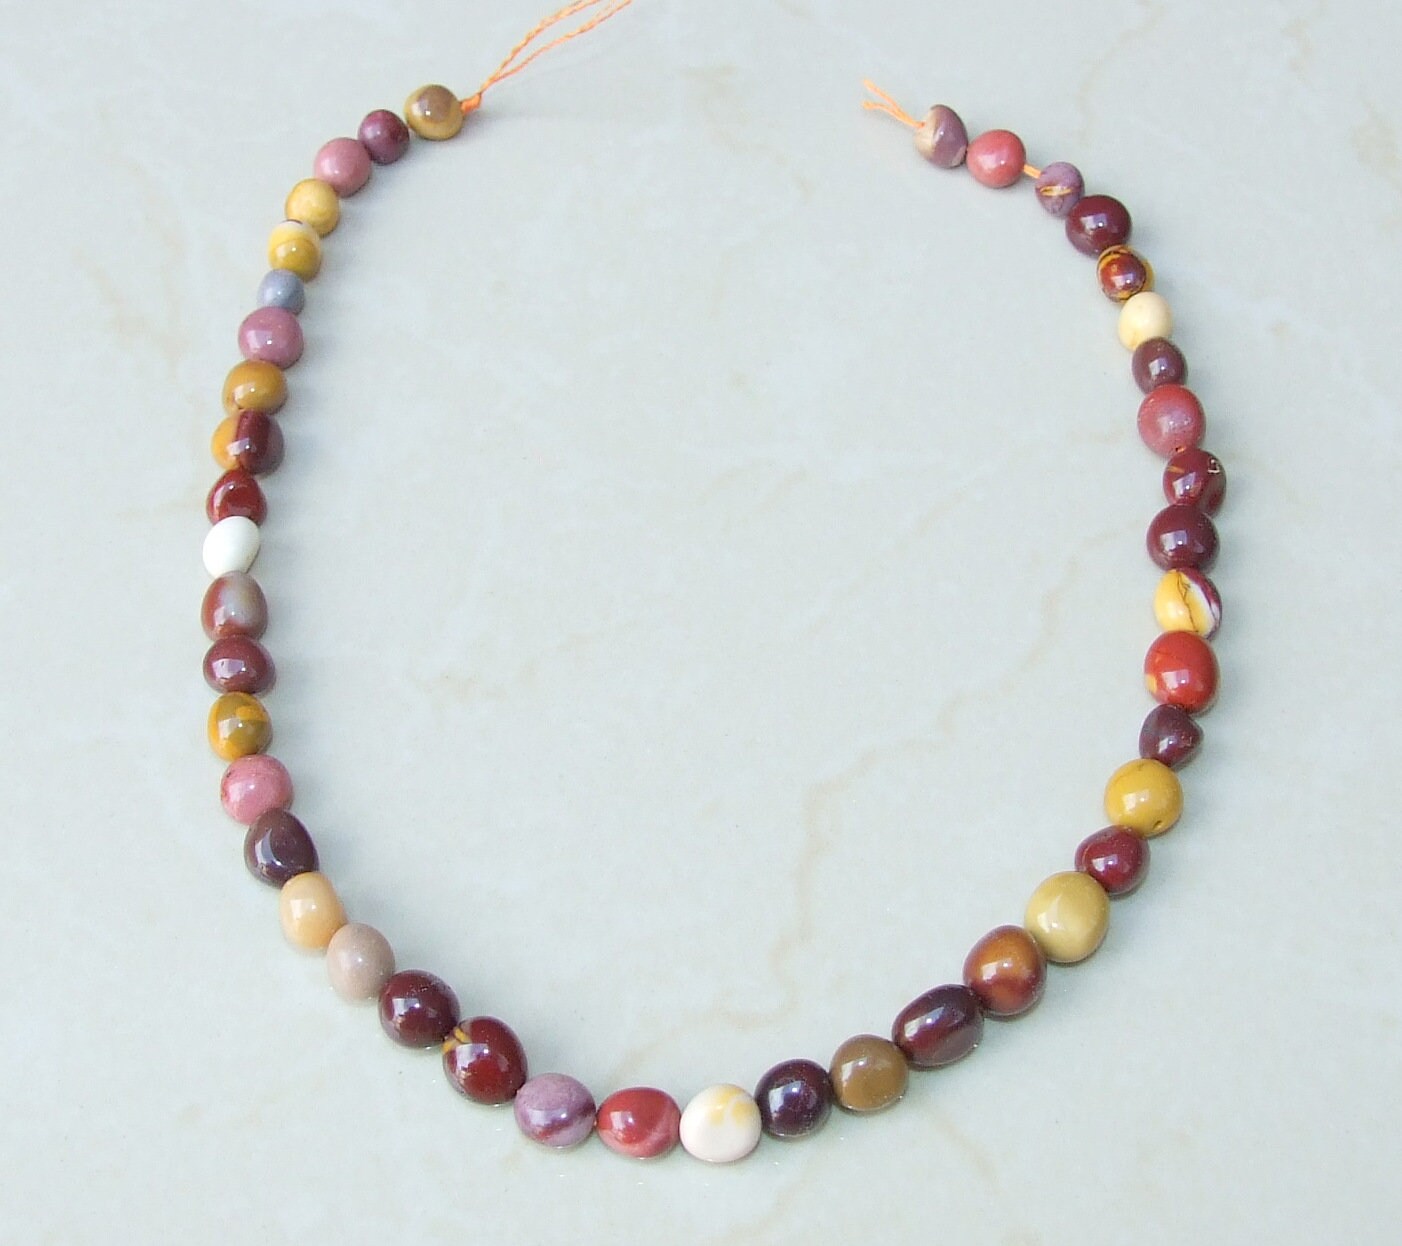 Mookaite Beads - Gemstone Beads - Mookaite Nuggets - Natural Mookaite Stone - Polished - Australian Jasper - Natural Gemstones  - 8mm - 10mm